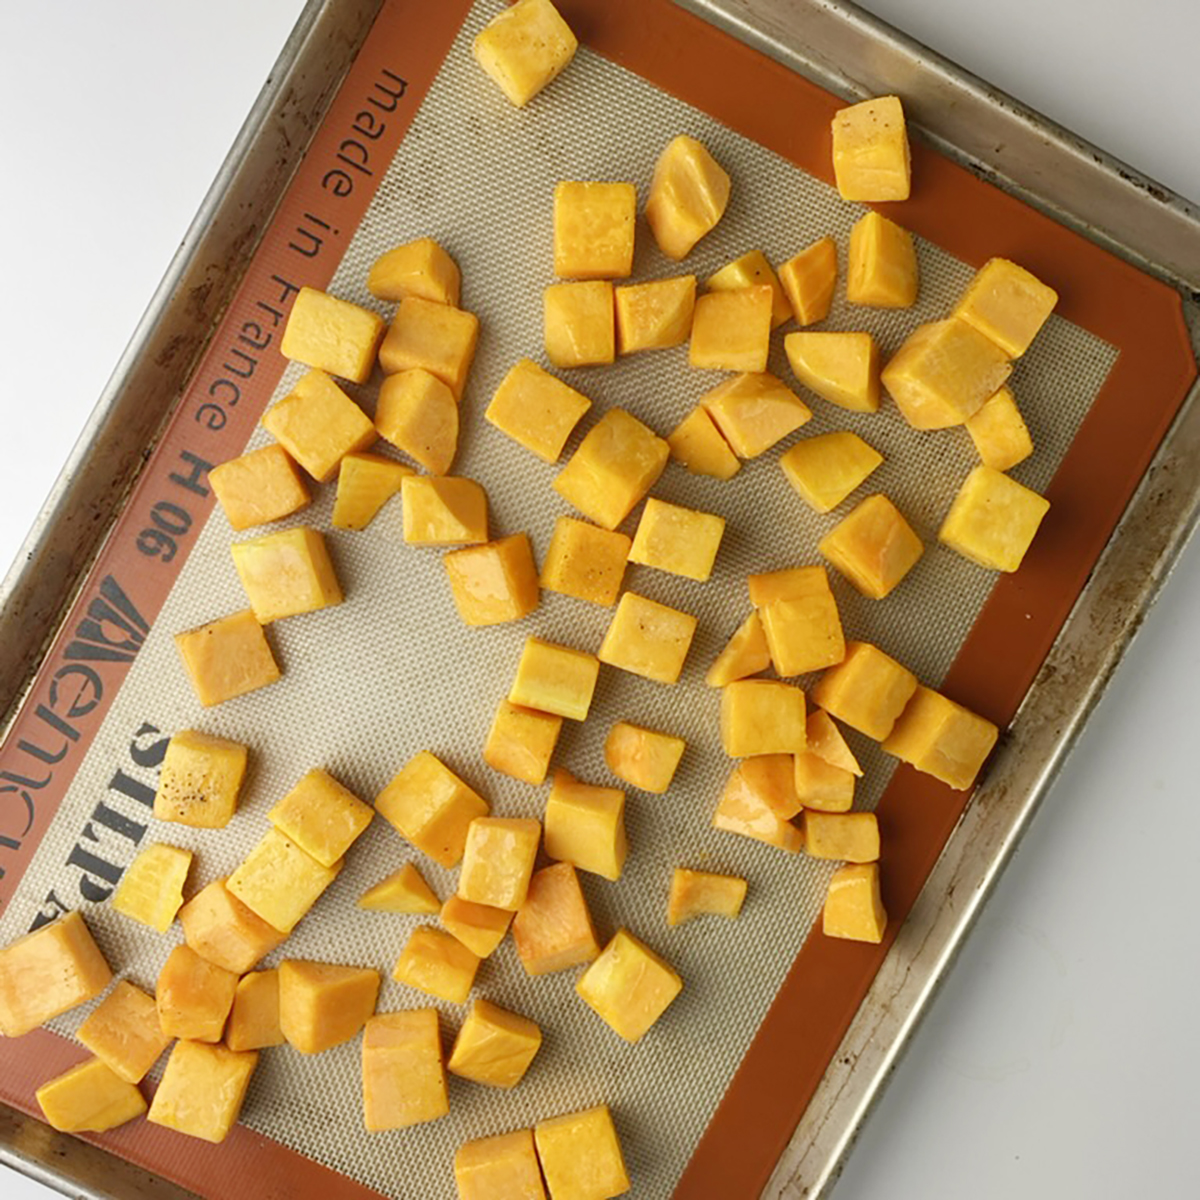 Butternut cubes on a baking tray.